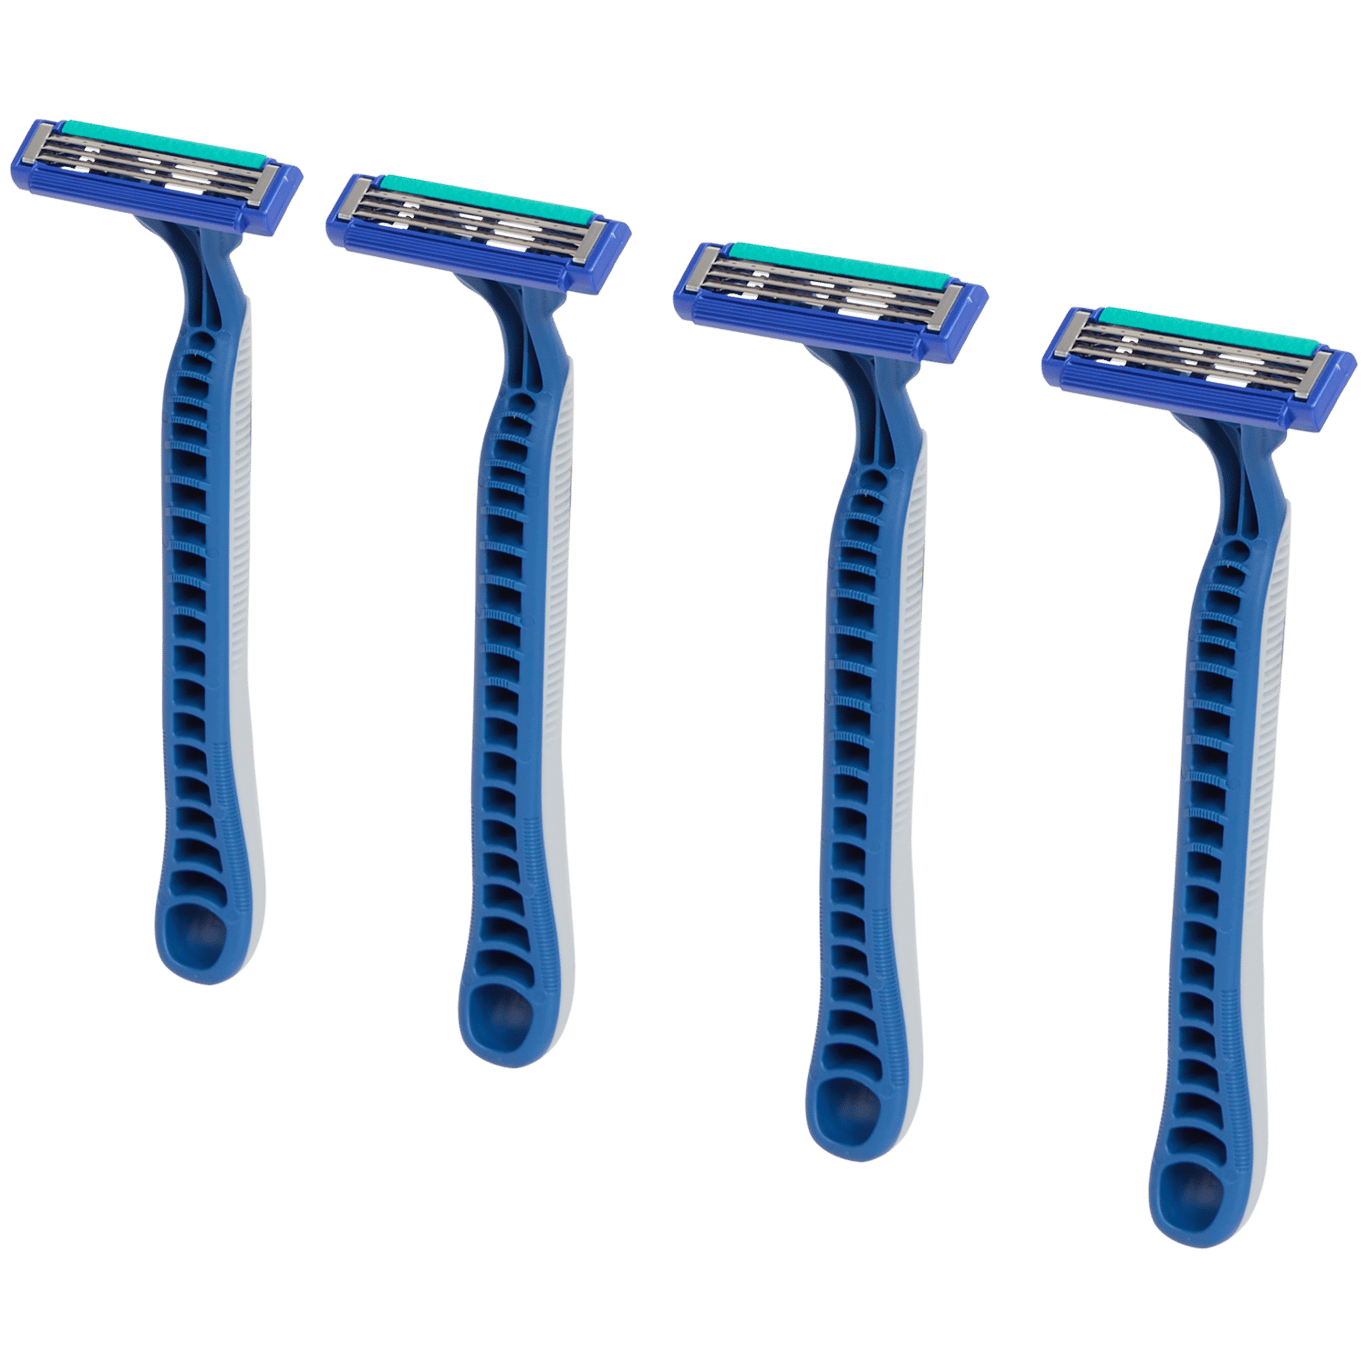 Maszynki do golenia Gillette Blue3 Simple